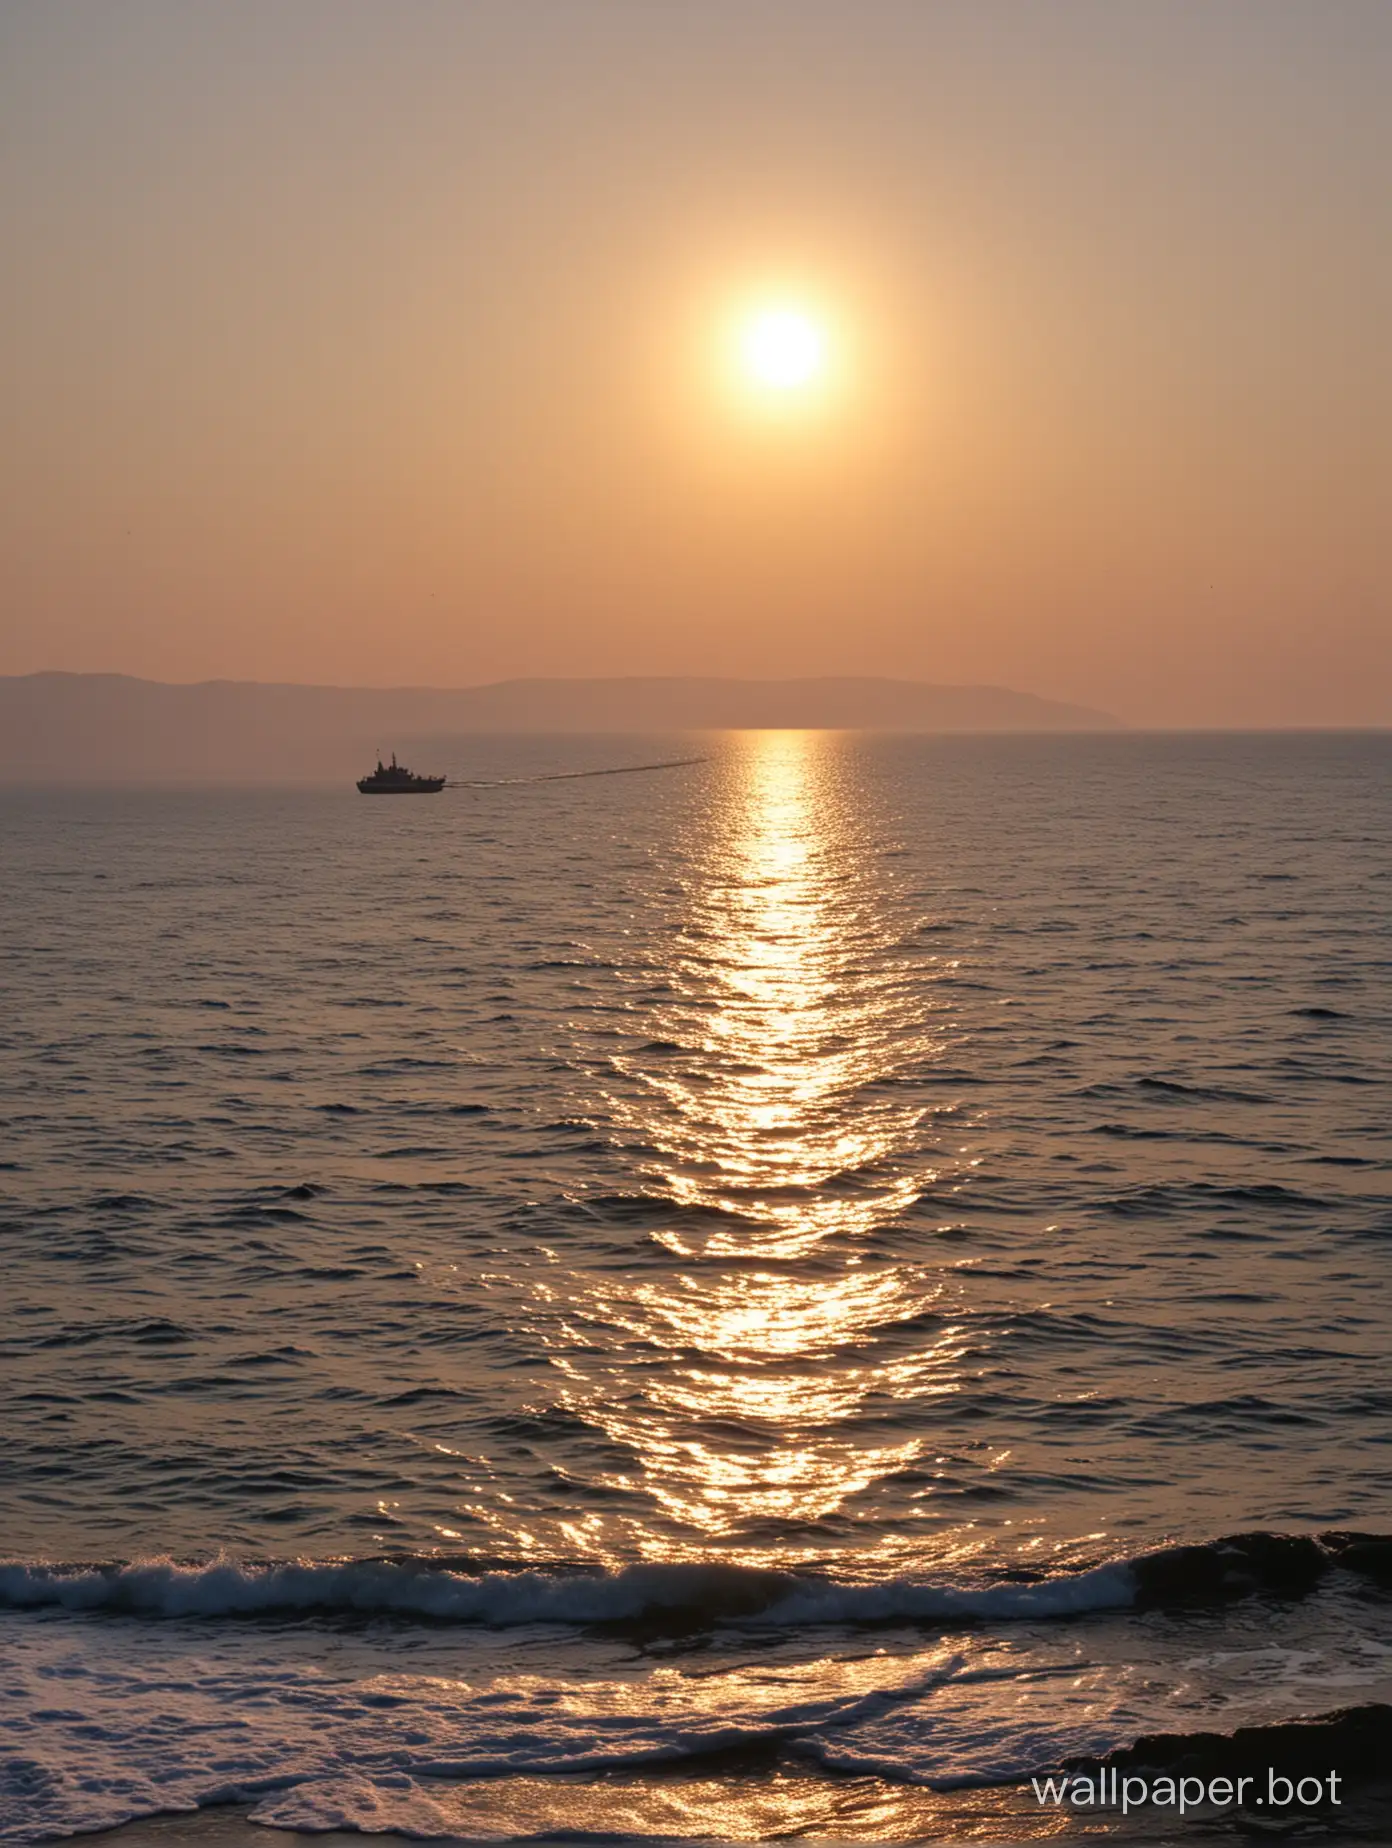 Crimea, sea, sunset, ship in the distance